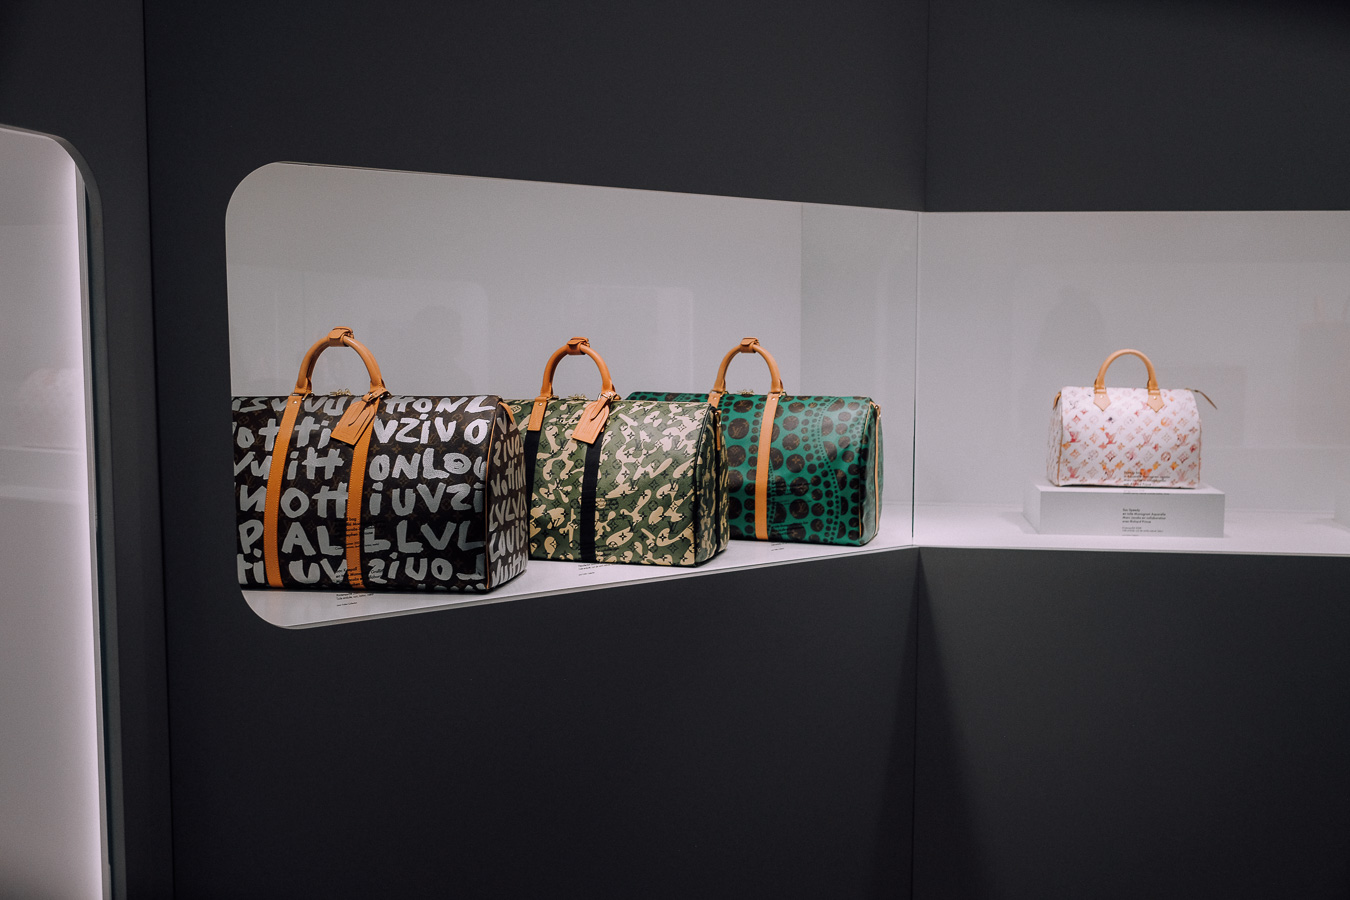 A (Free!) Louis Vuitton Exhibit Has Landed in Toronto